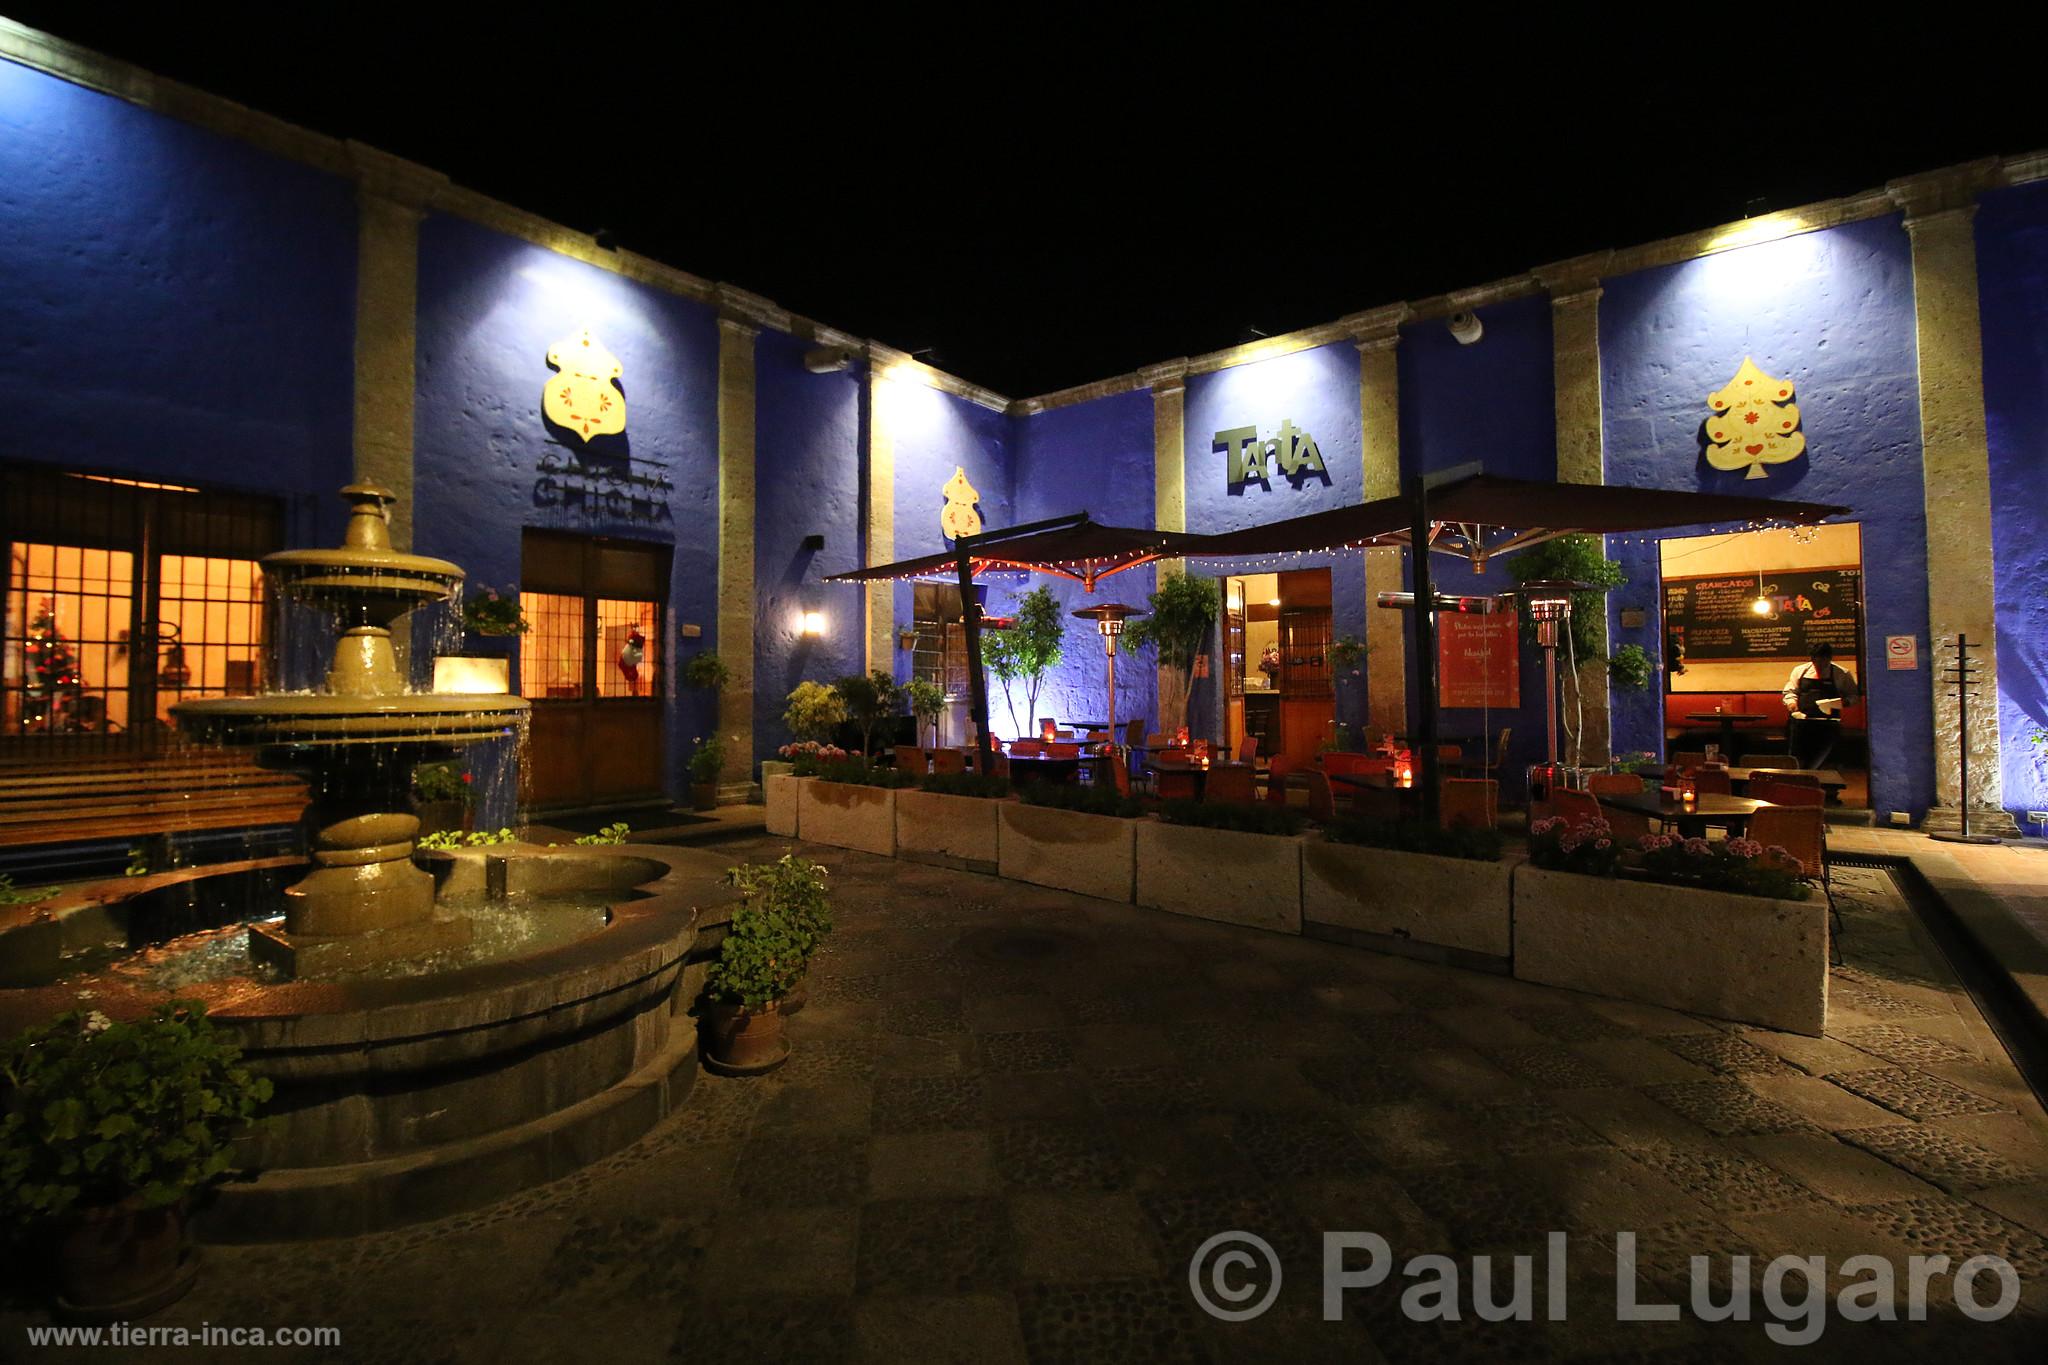 Restaurantes Chicha y Tanta, Arequipa